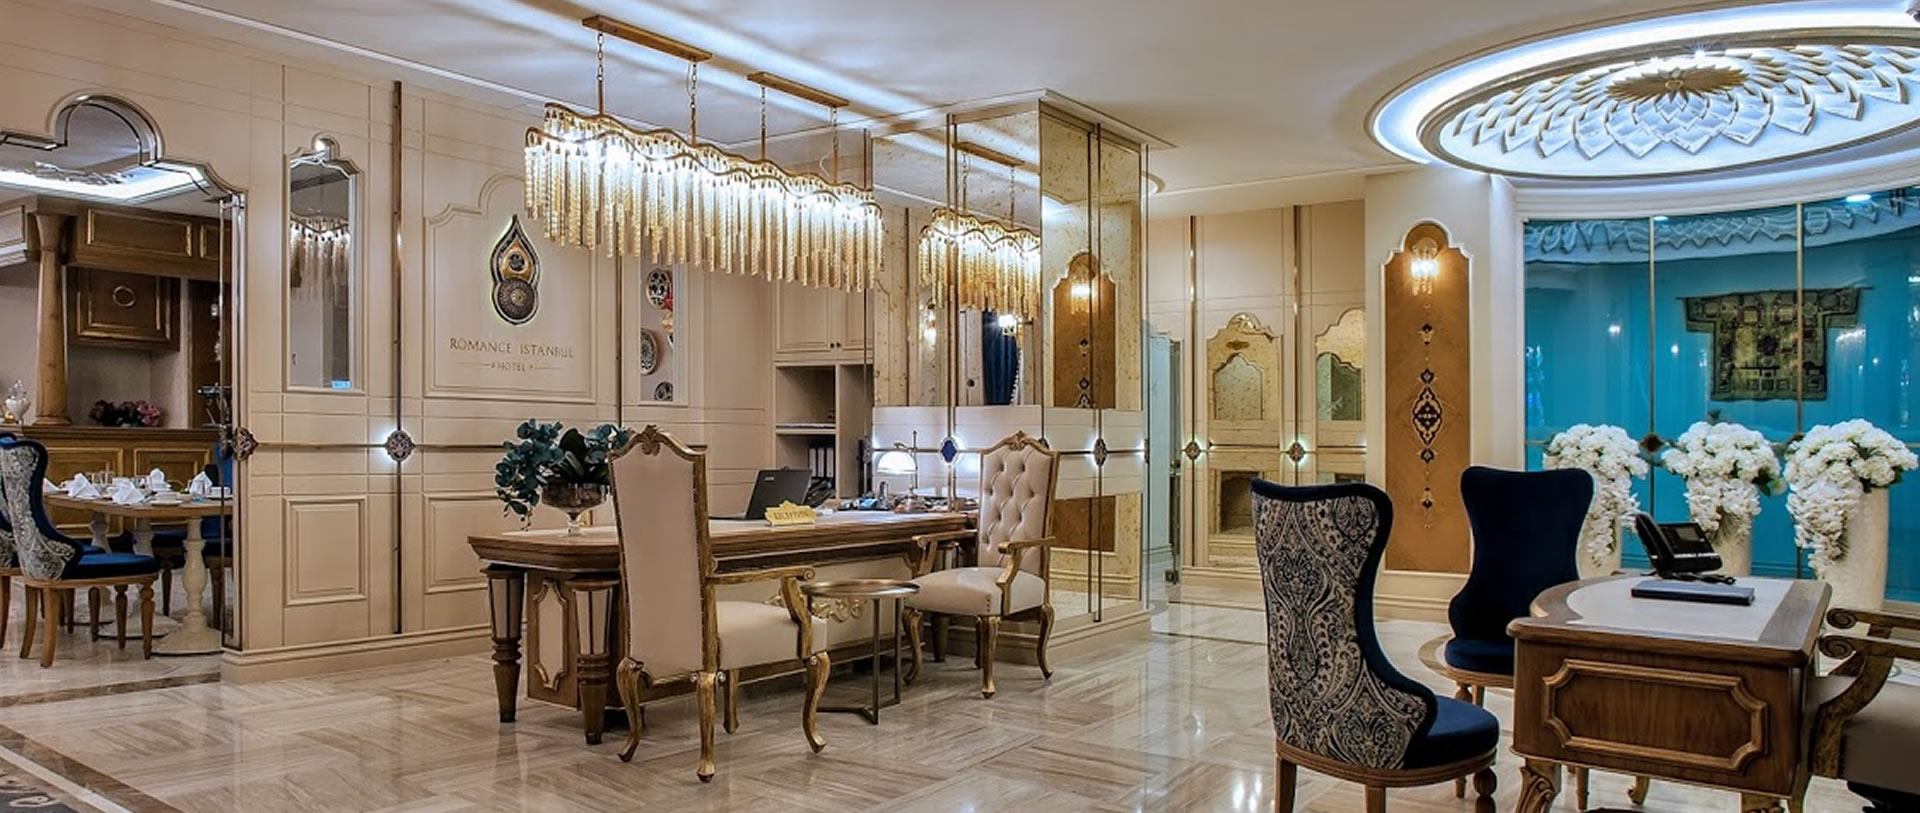 Gallery Romance Istanbul Hotel Luxury Hotel Spa In Sultanahmet